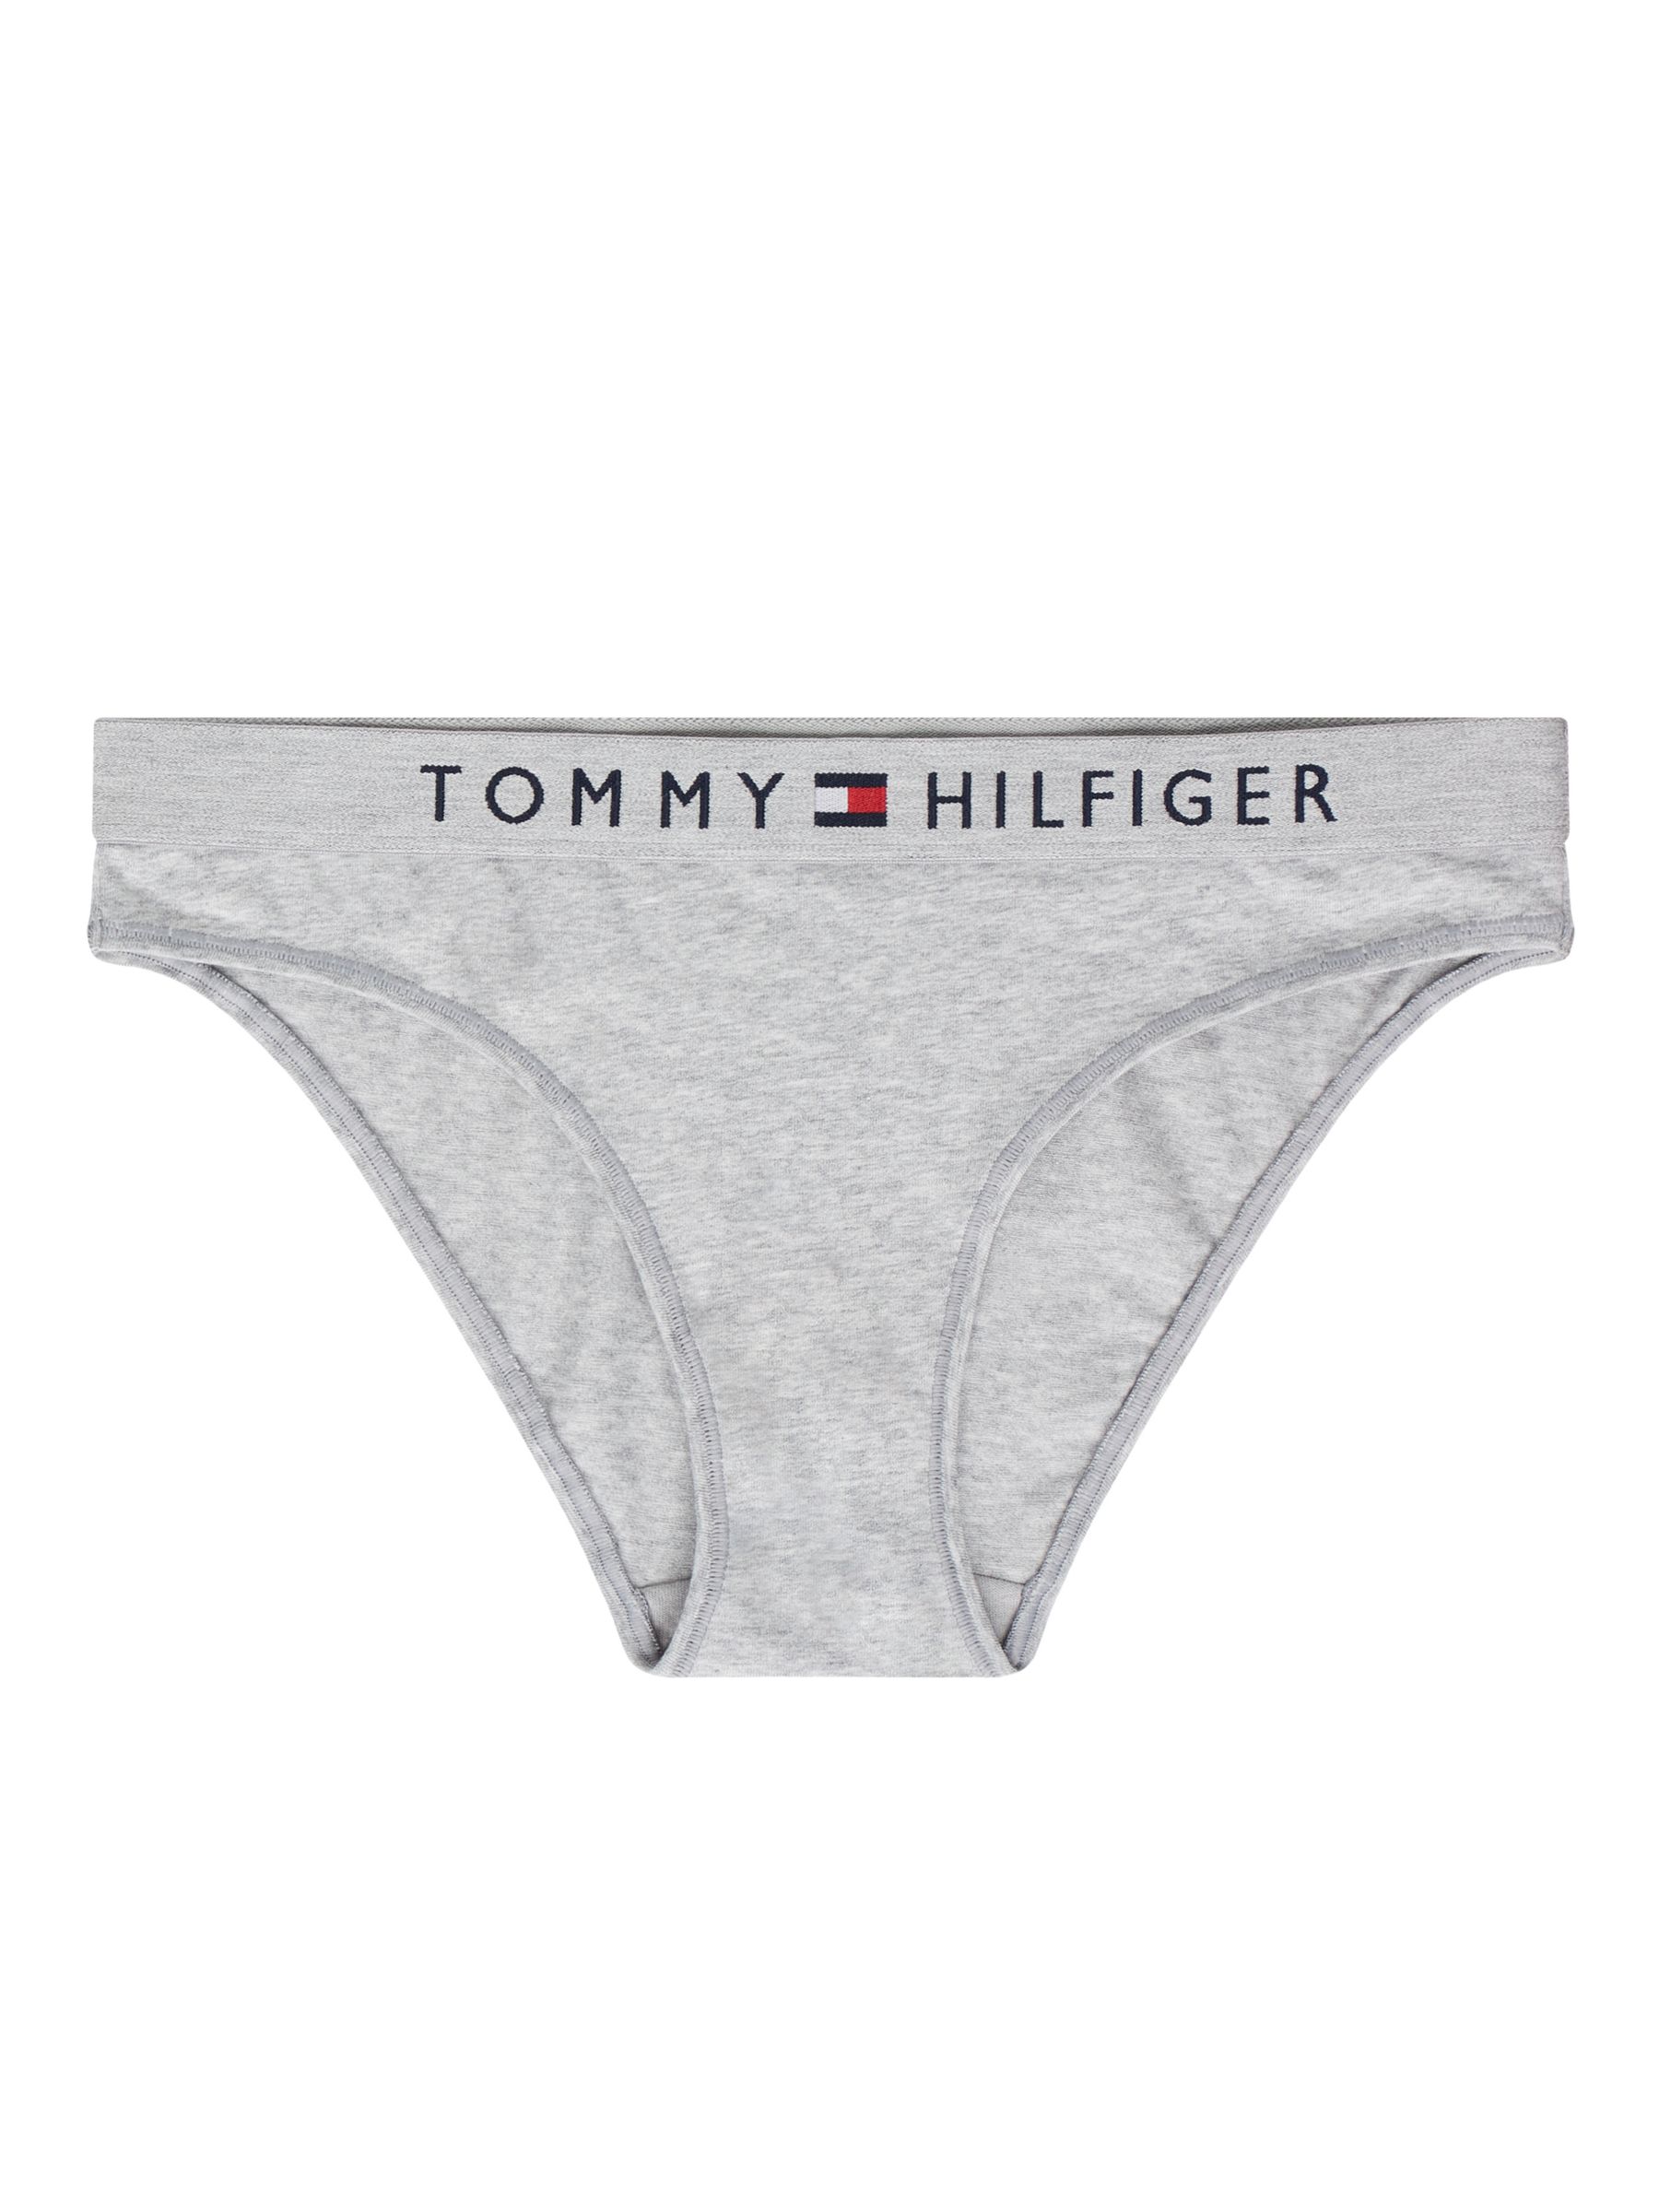 Used underwear gray stock image. Image of satin, domestic - 33945477